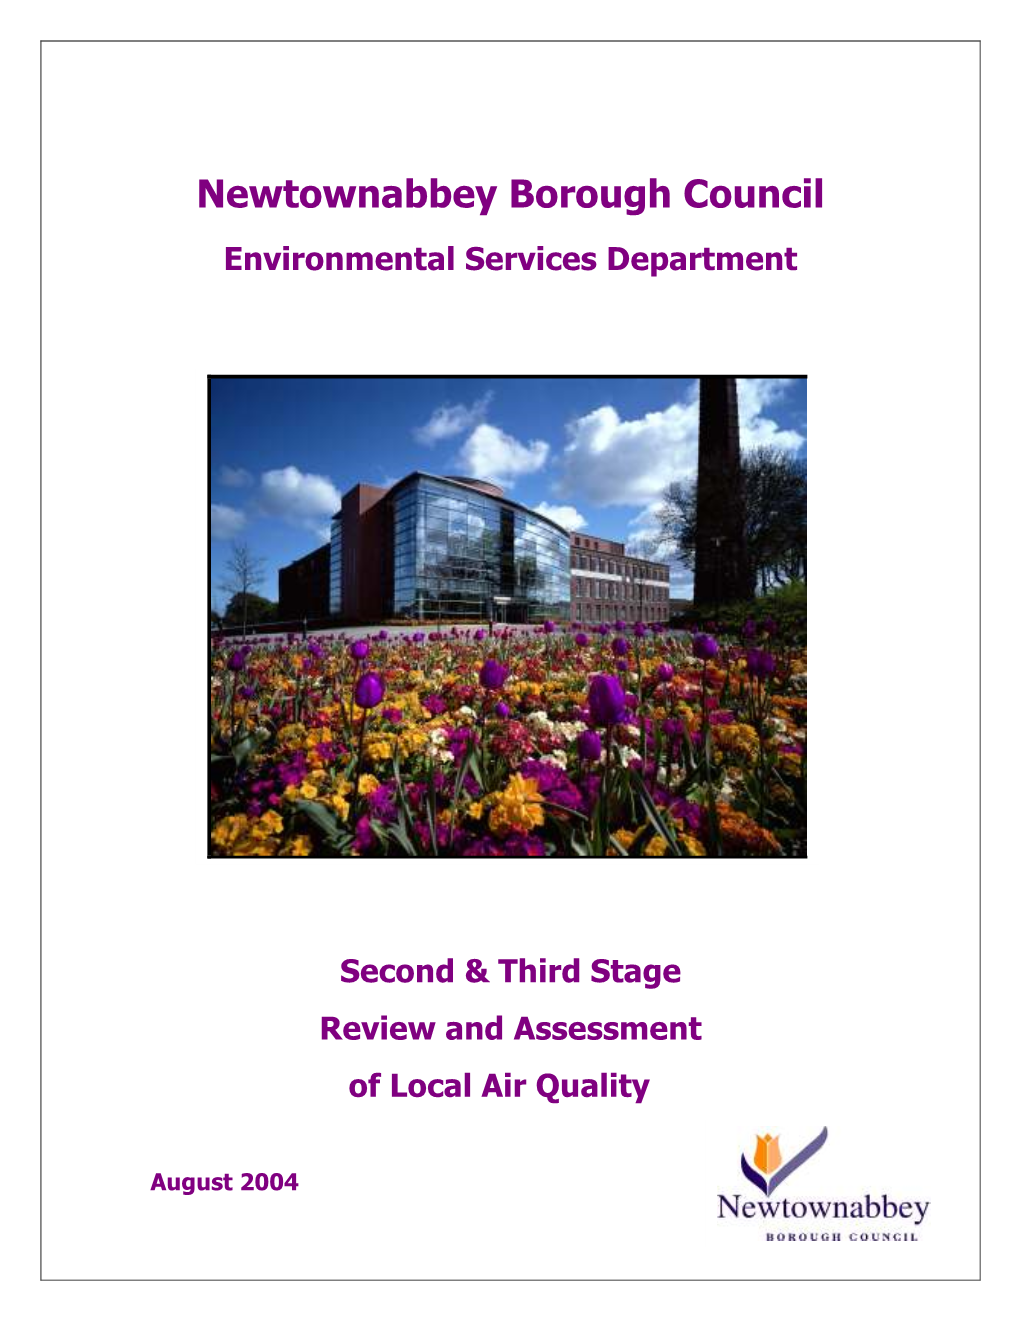 Newtownabbey Borough Council Environmental Services Department